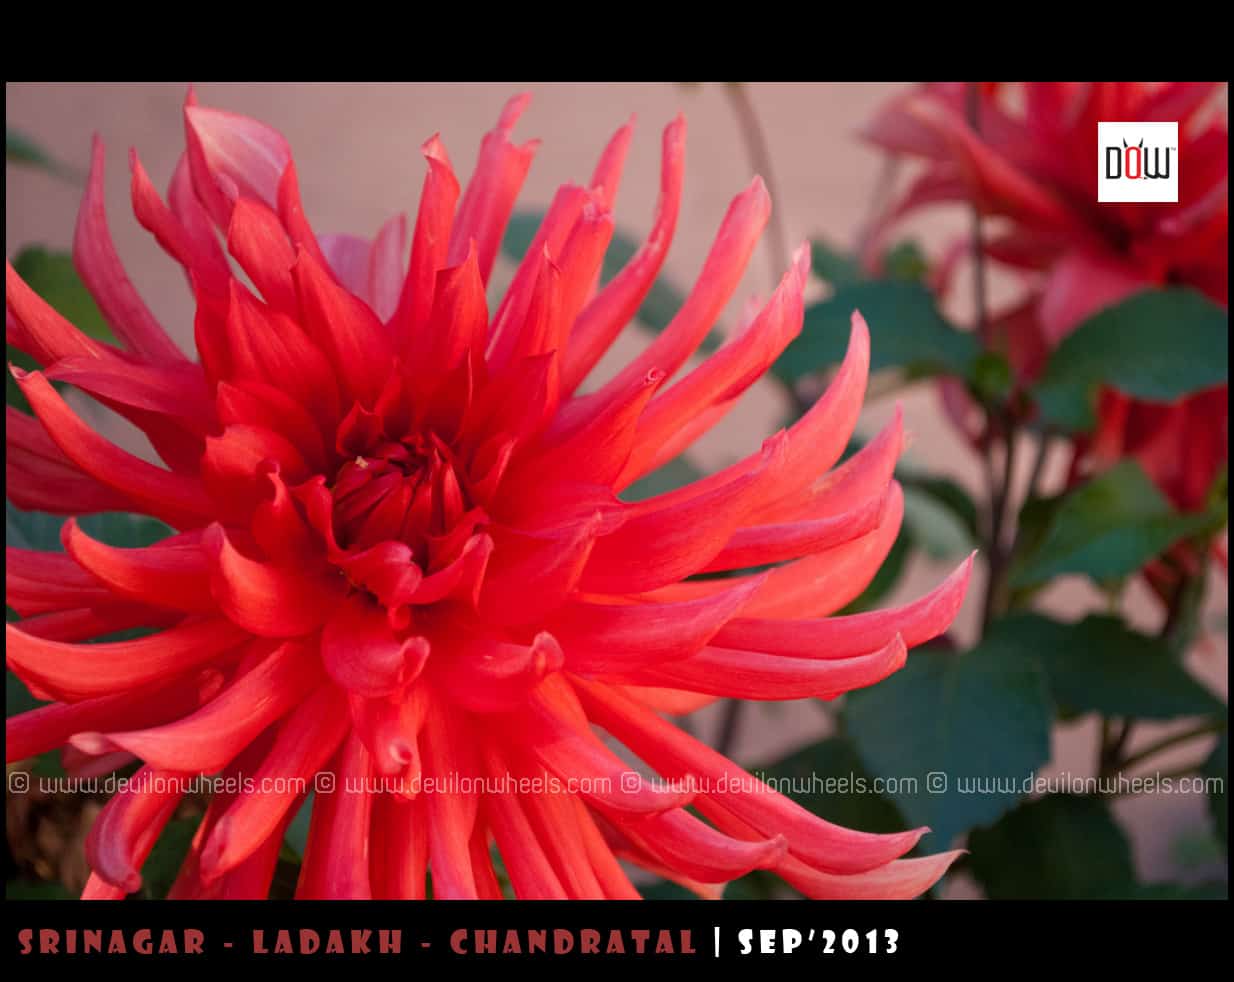 Beautiful Flowers from Ladakh